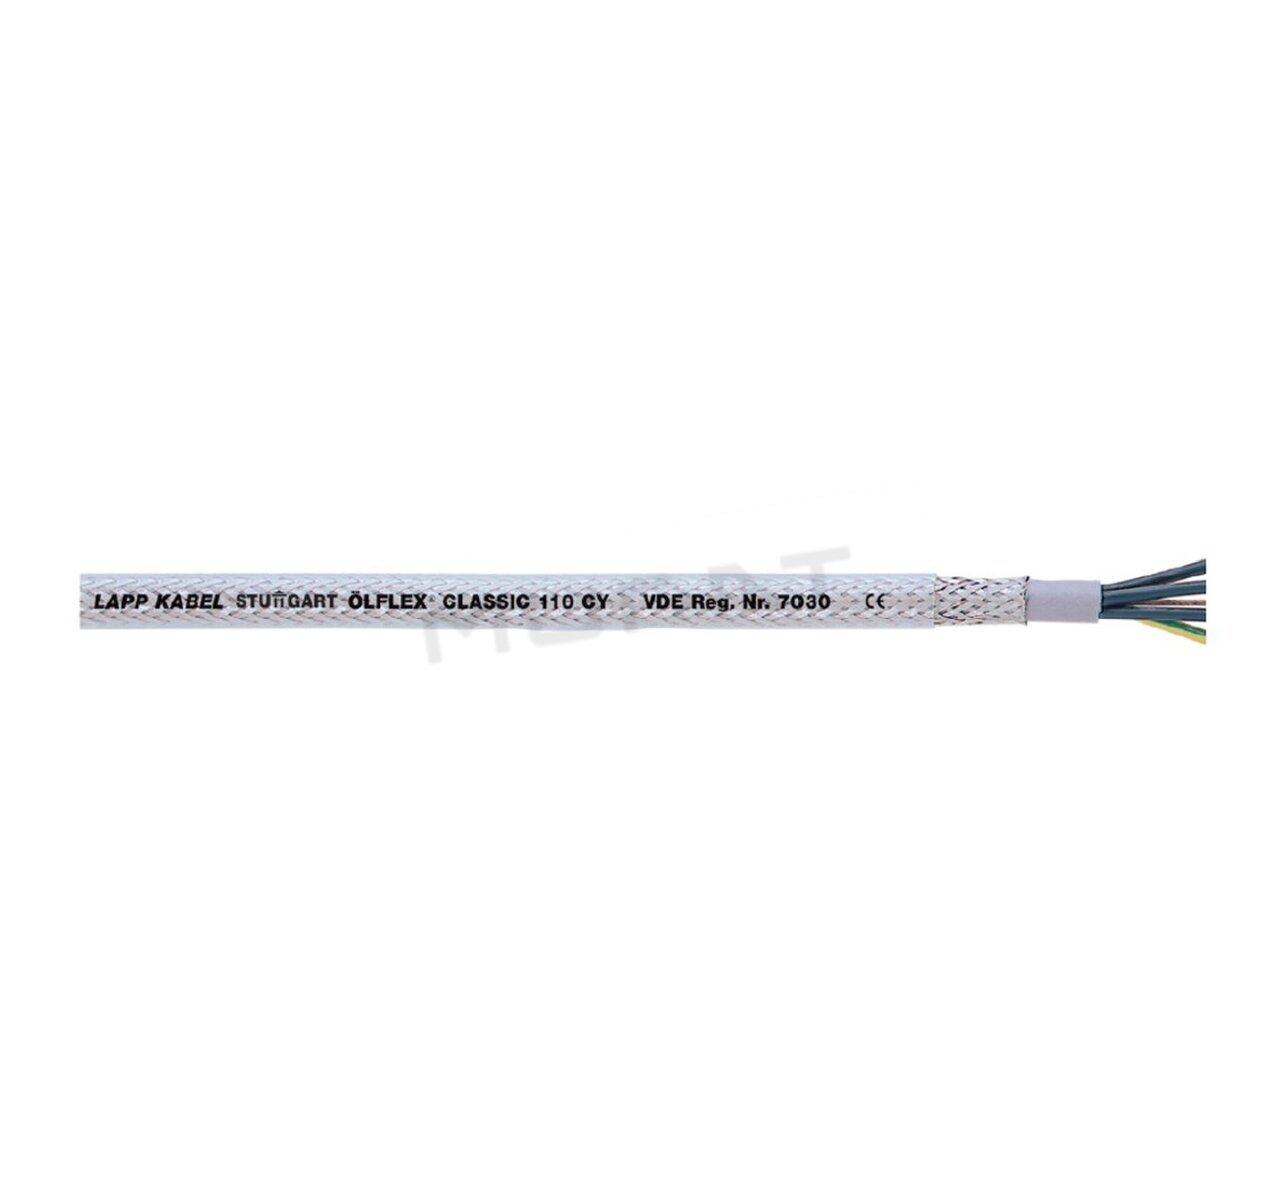 Kábel OLFLEX CLASSIC 110 CY 4Gx2,5 mm2